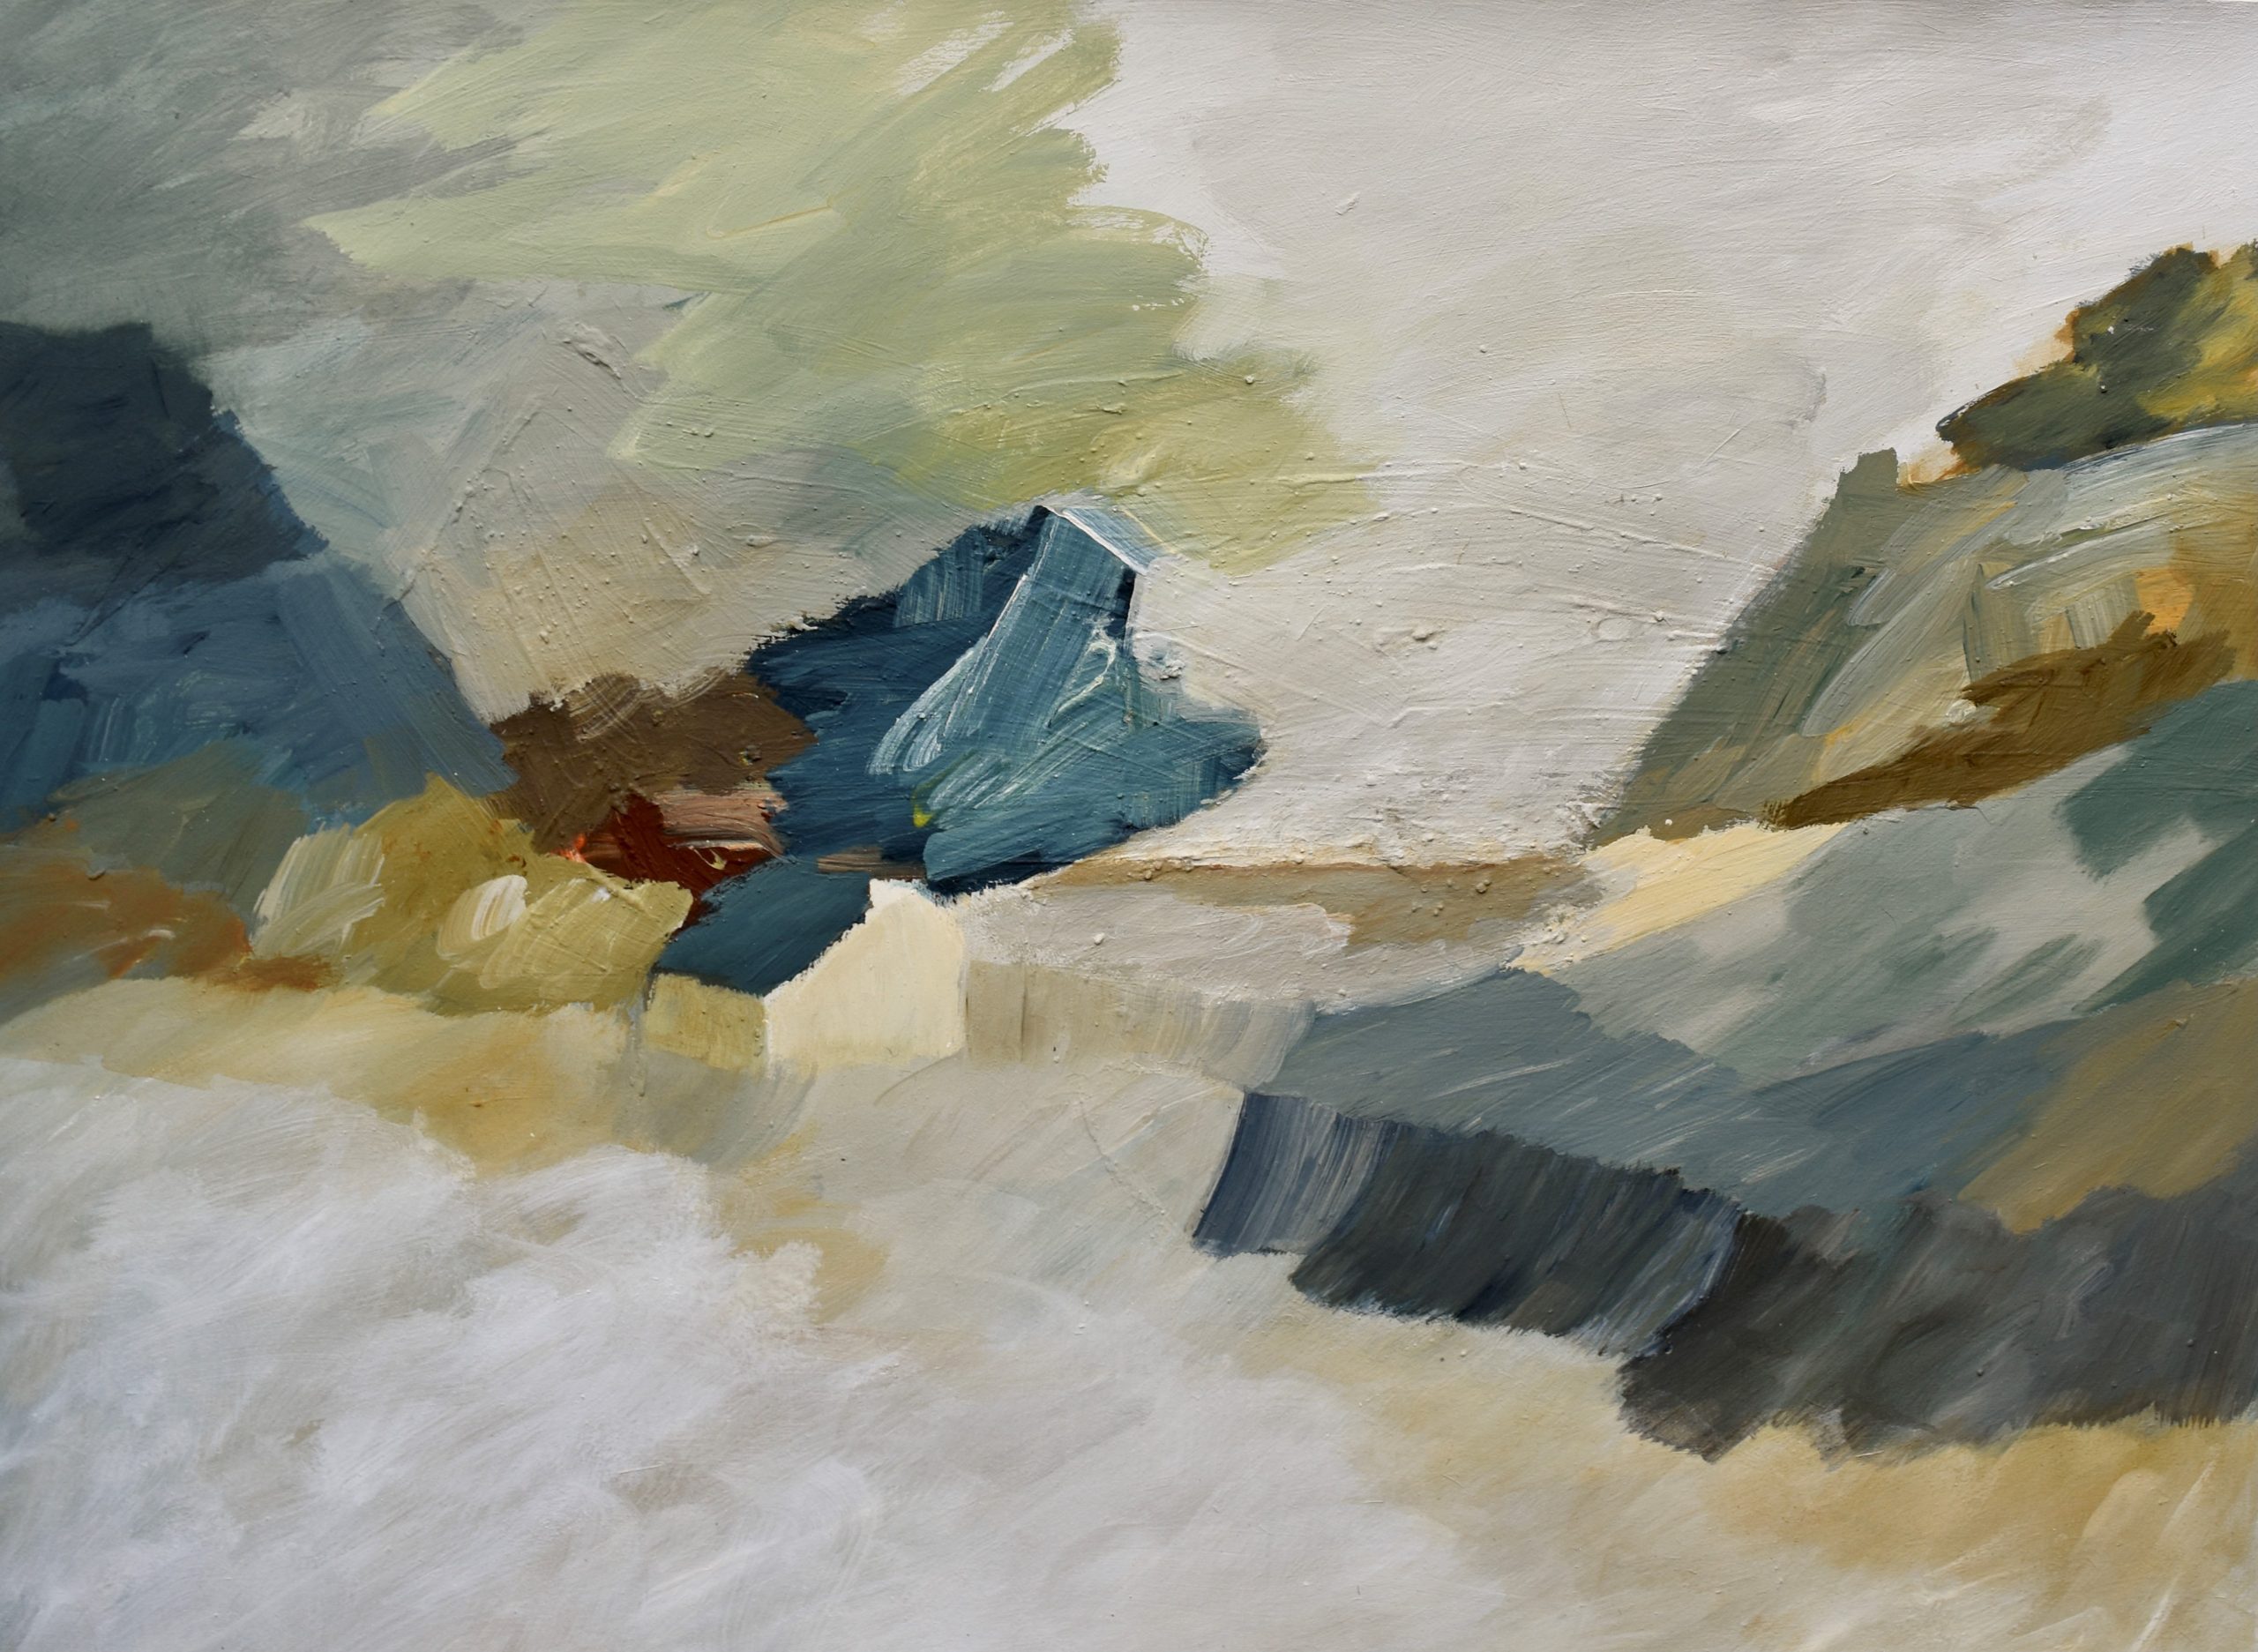 Eleanor Millard 'A Rough White Sea' acrylic on Dutch aquatint paper 76 x 98cm $6,500